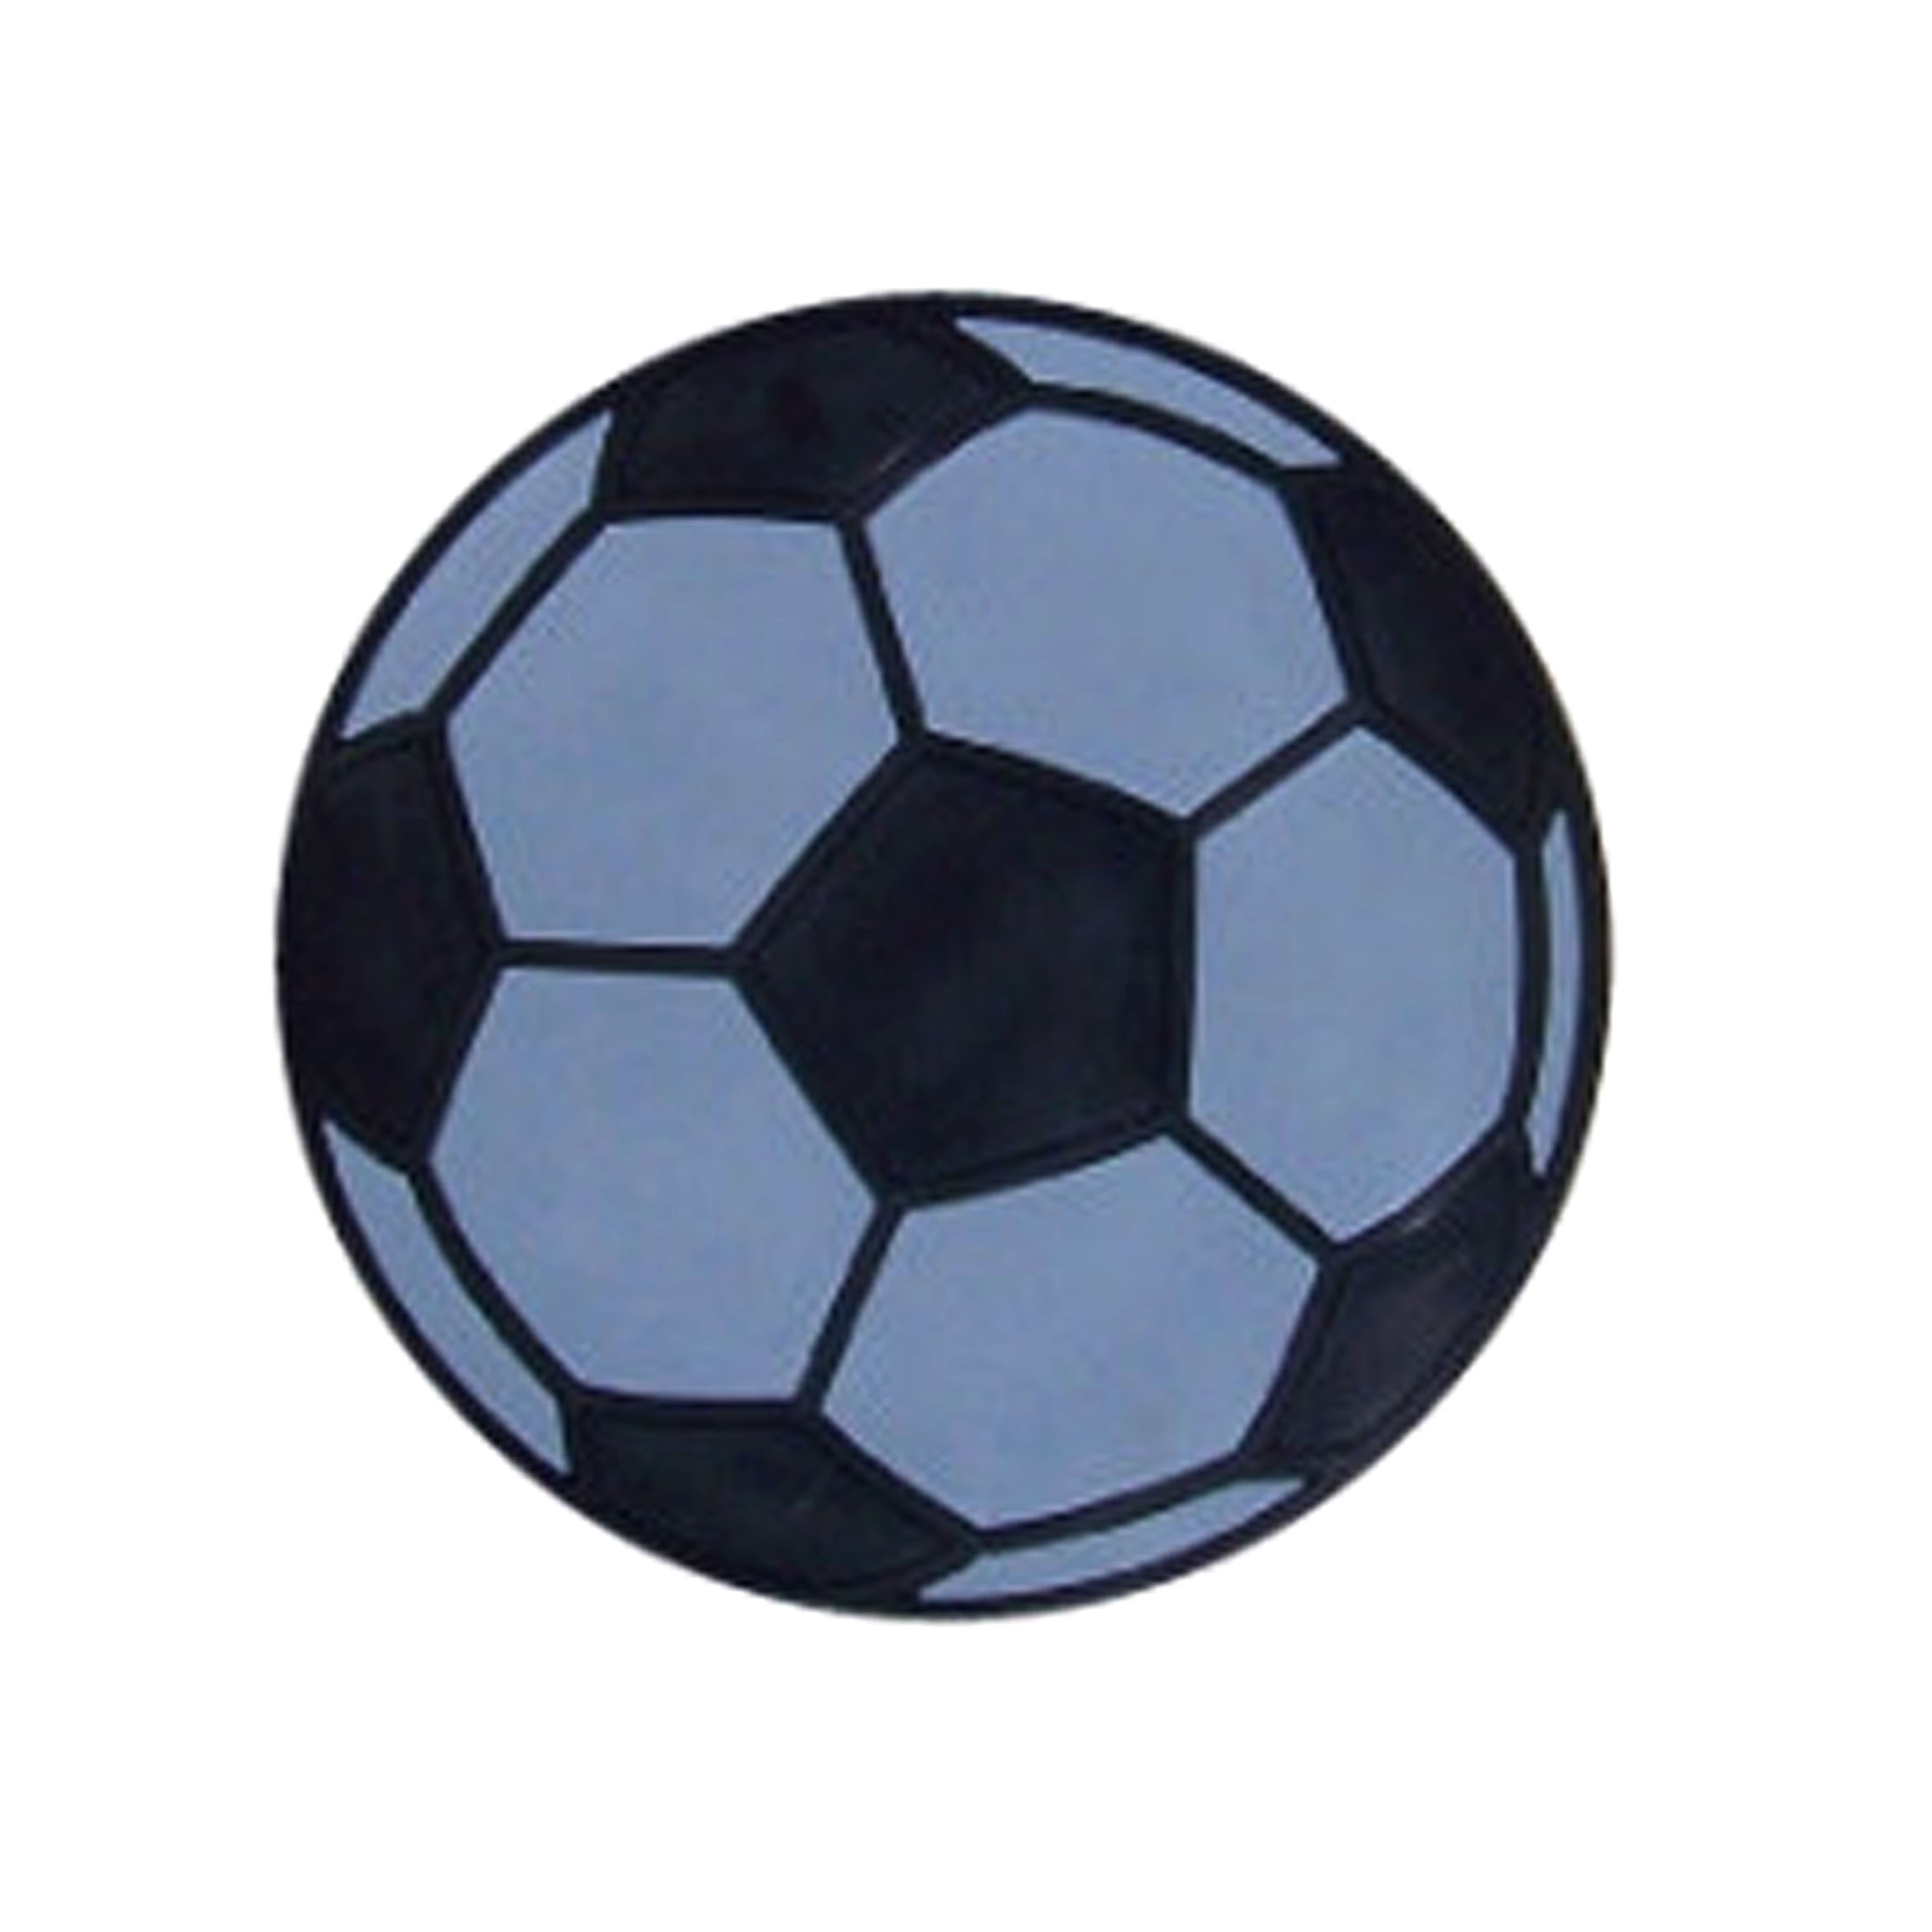 Poly Soccer Balls – 12 Pack